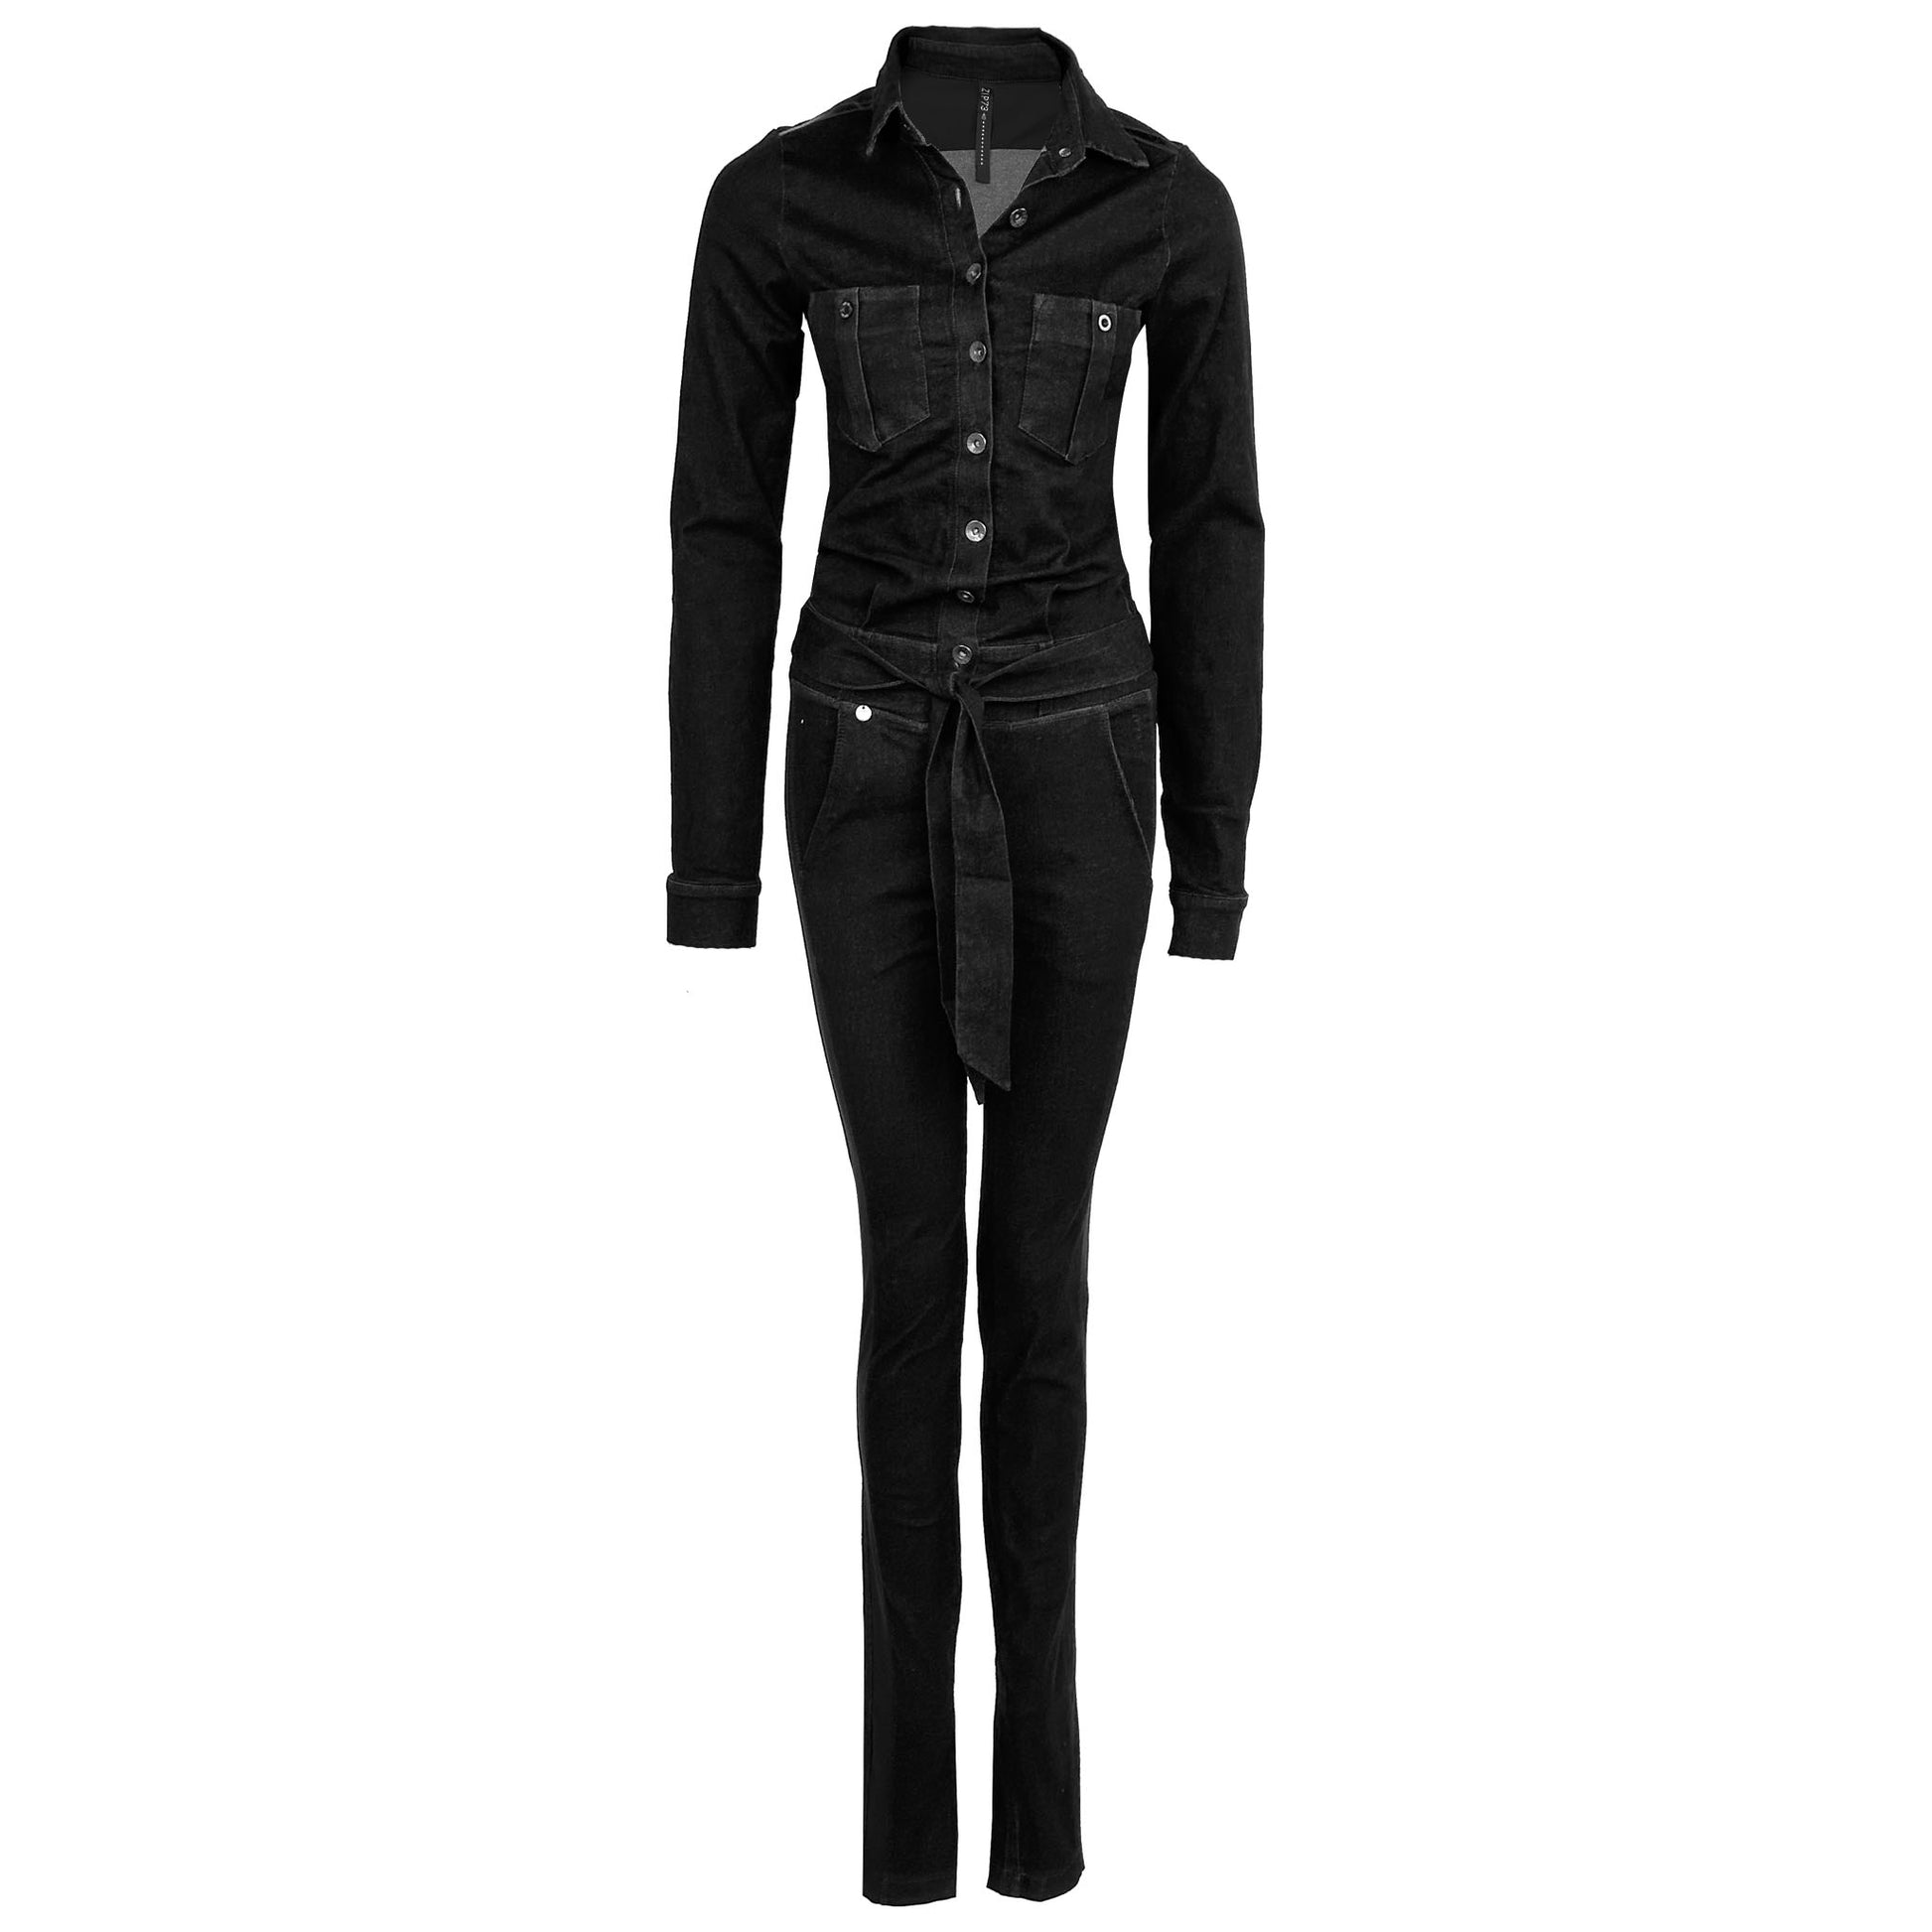 kleding lange vrouwen zip73 jumpsuit denim black